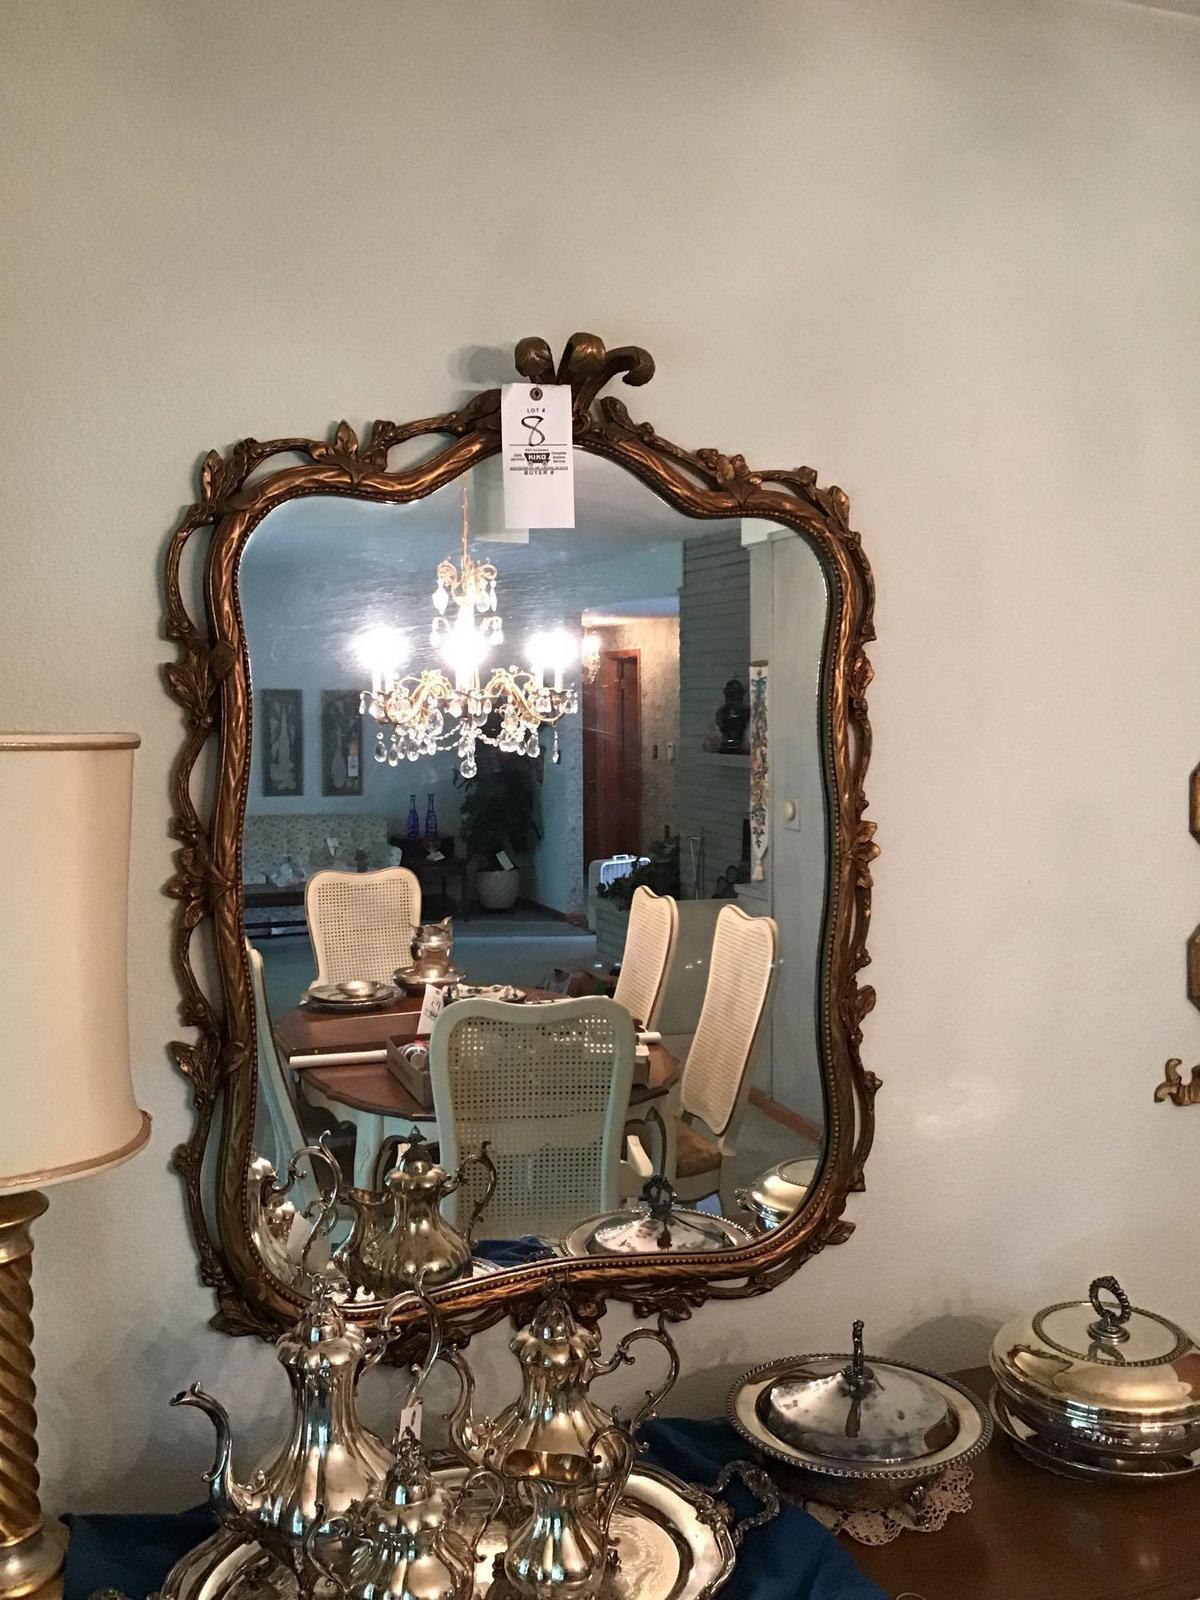 Gold framed mirror, framed bird plates, and lamp